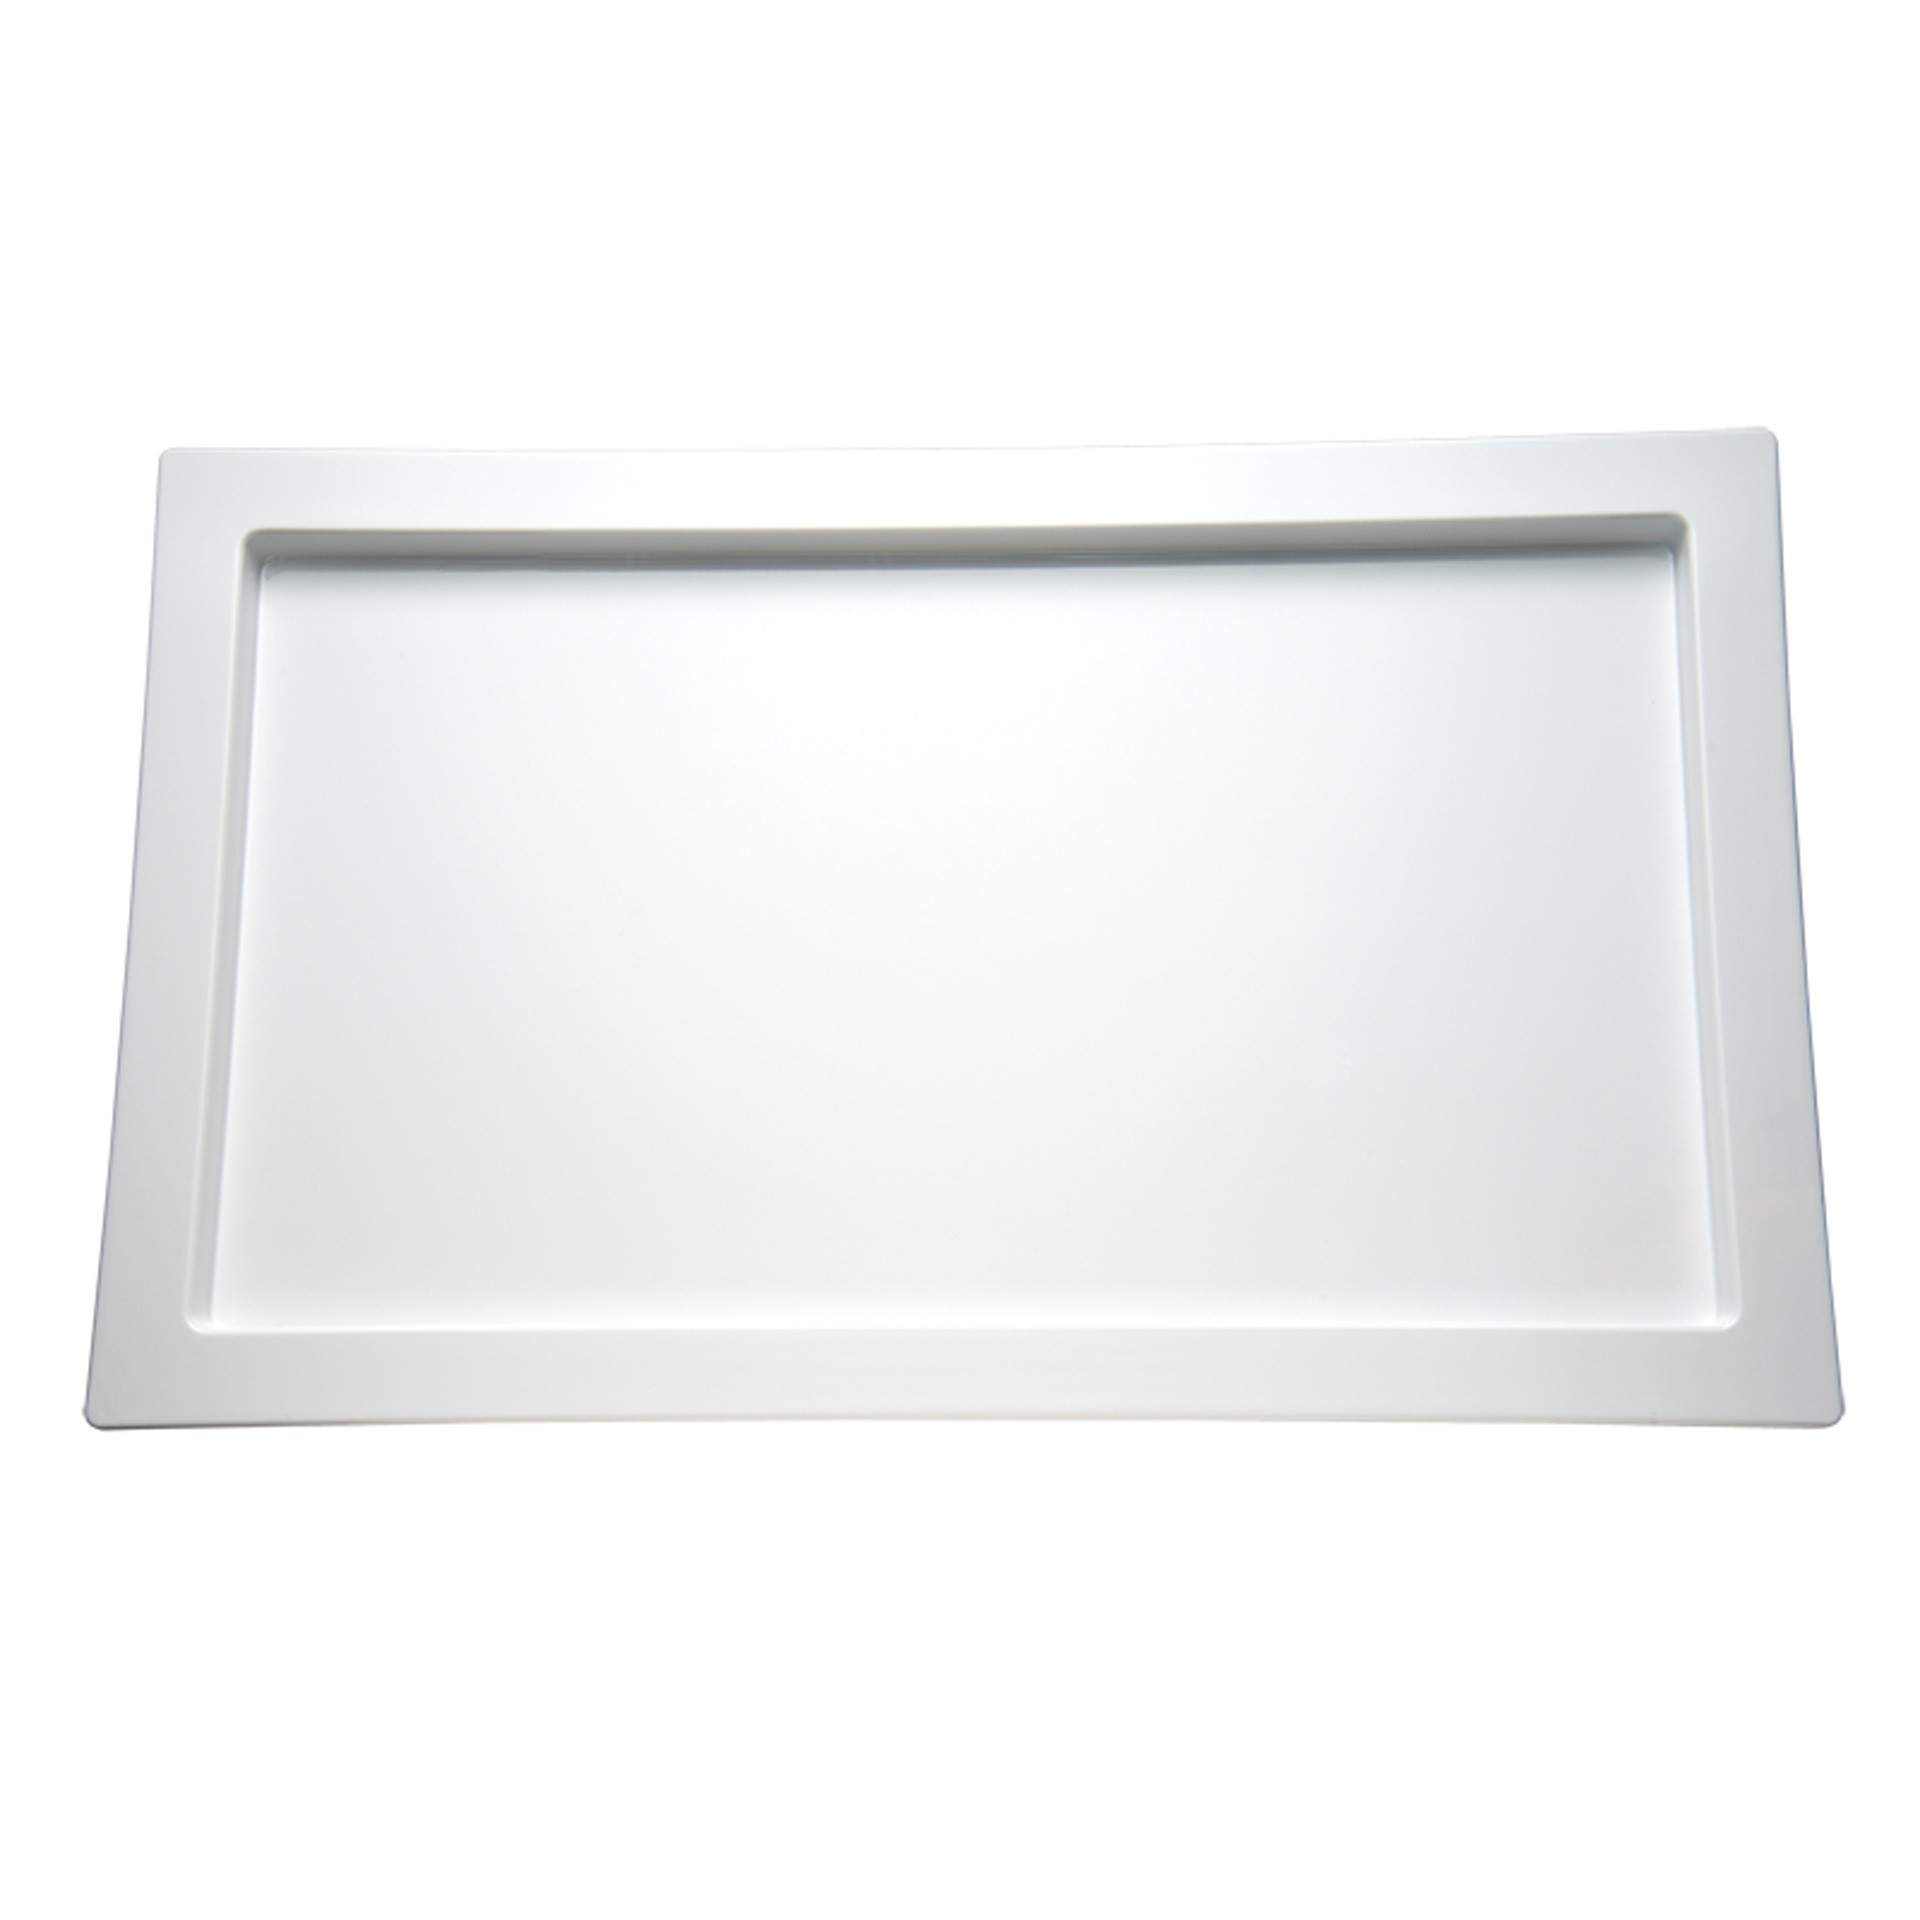 GN-Tablett - Serie Frames - weiß - Abm. 2,0 cm - GN 1/1 (530 x 325 mm) - Melamin - 84046-B